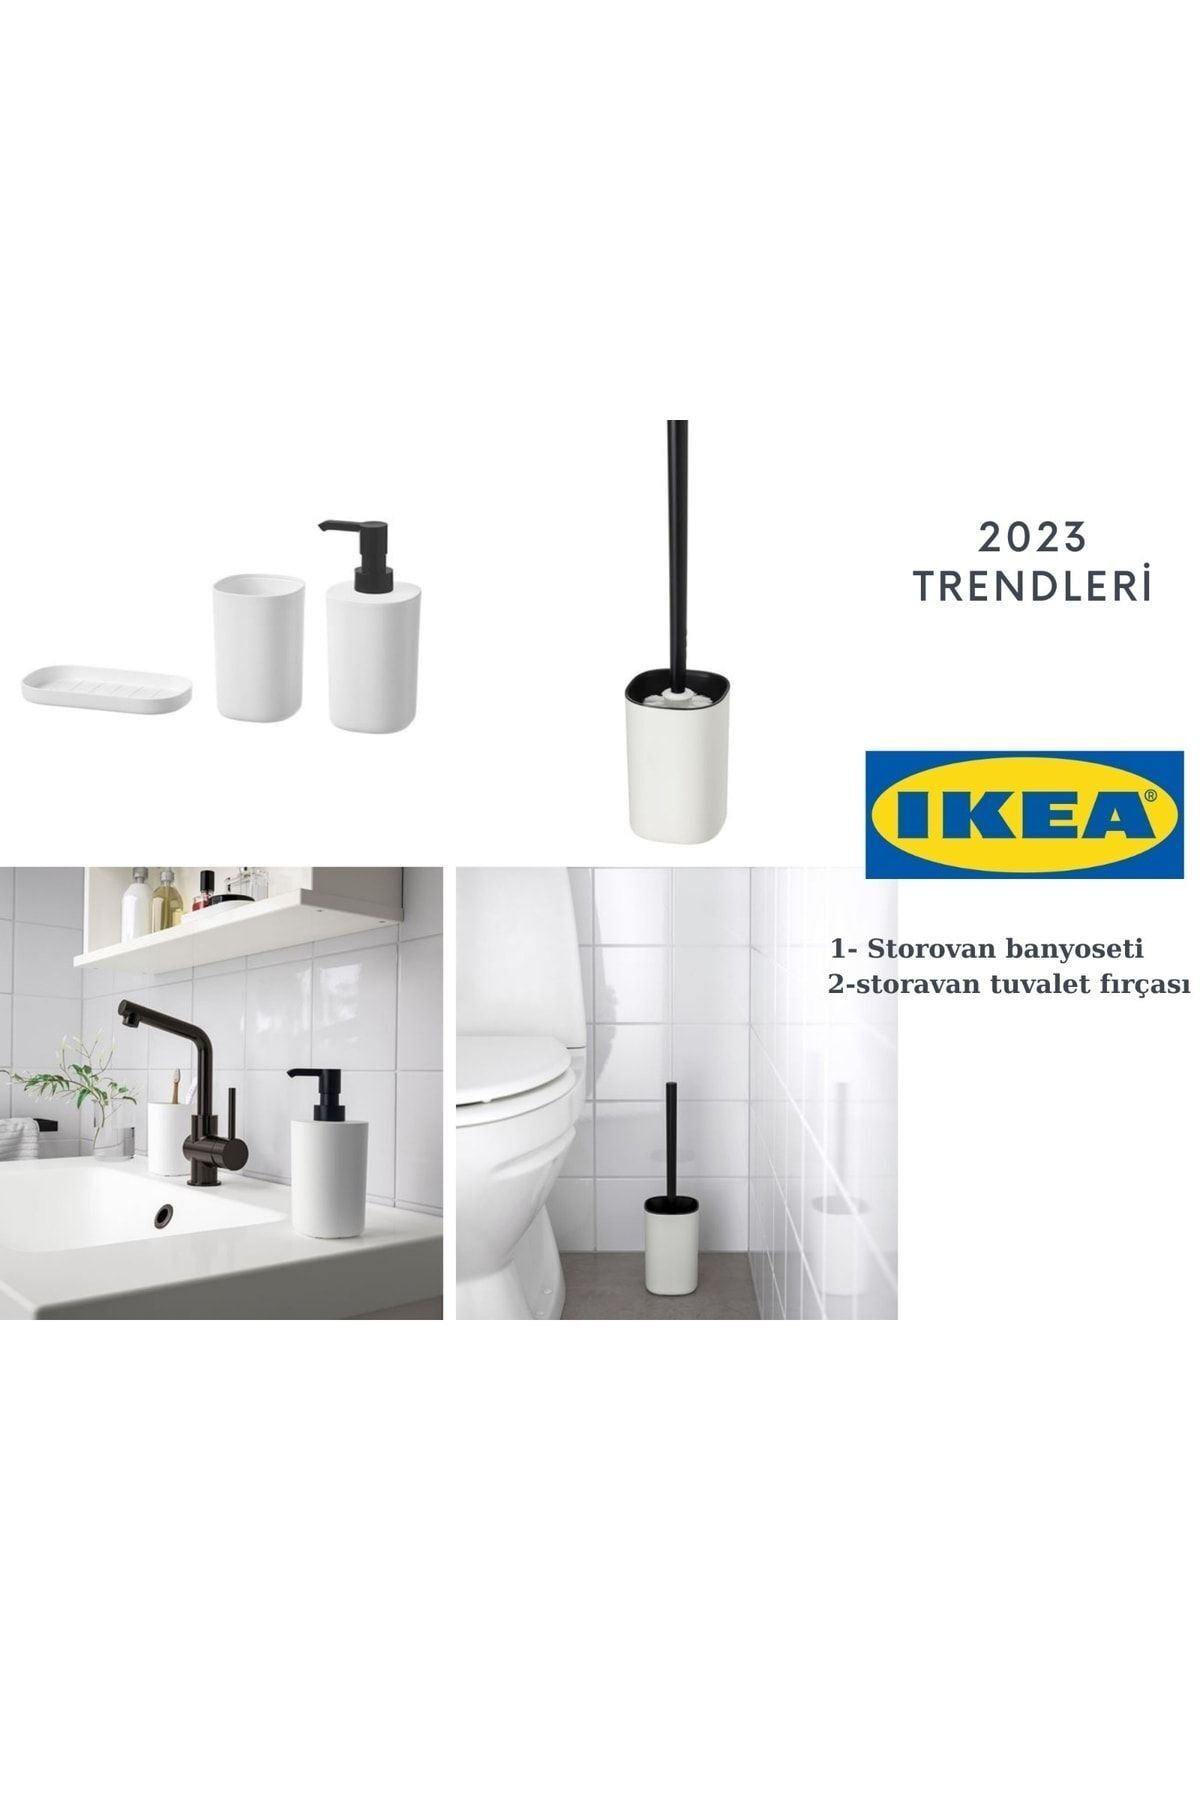 IKEA Storovan Banyo Seti 3'lü + Storavan Tuvalet Fırçası Europestore